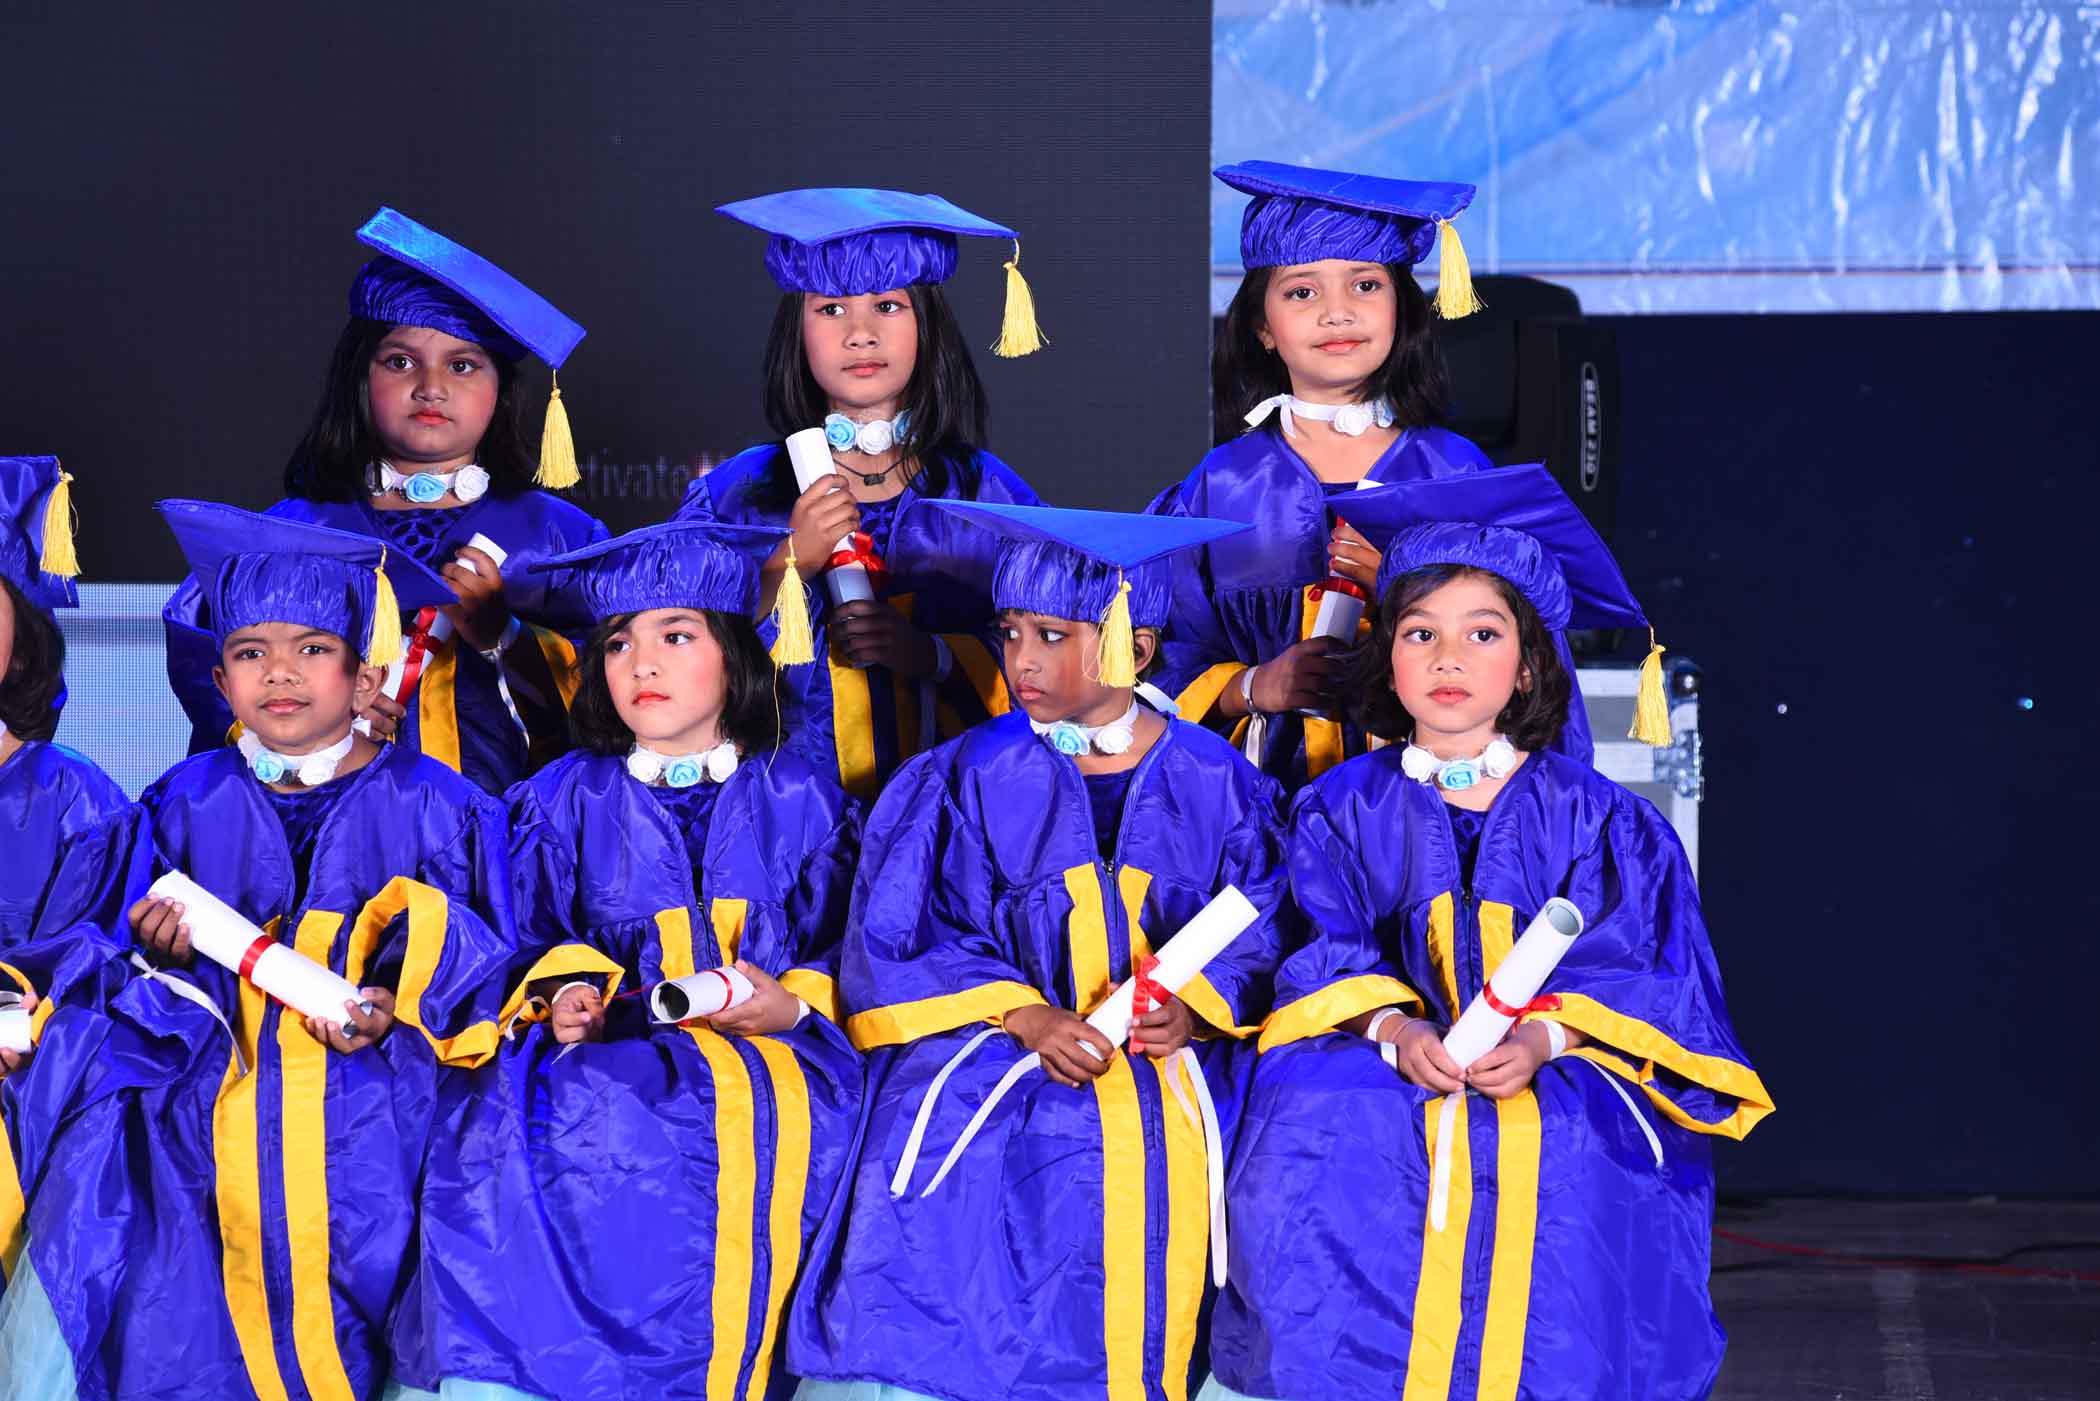 Graduation Day Ceremony of Montessori students - Ryan International School, MIDC Nagpur